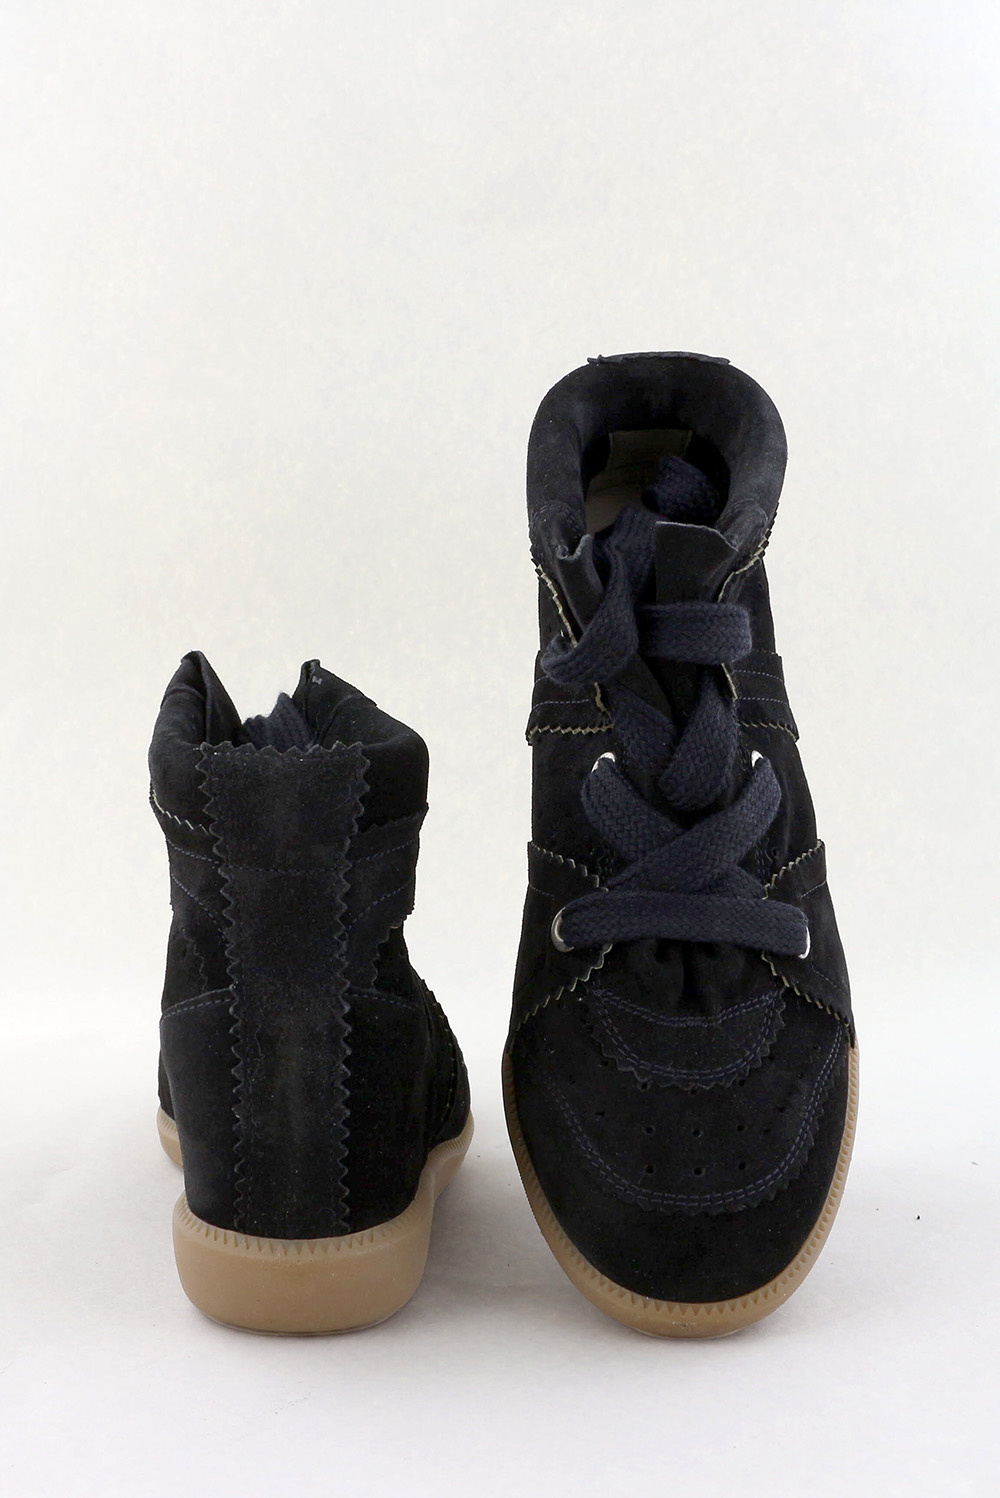 hypothese Recensent boog Isabel Marant sneakers Bobby BK0011FA-A1E20S black - Marjon Snieders